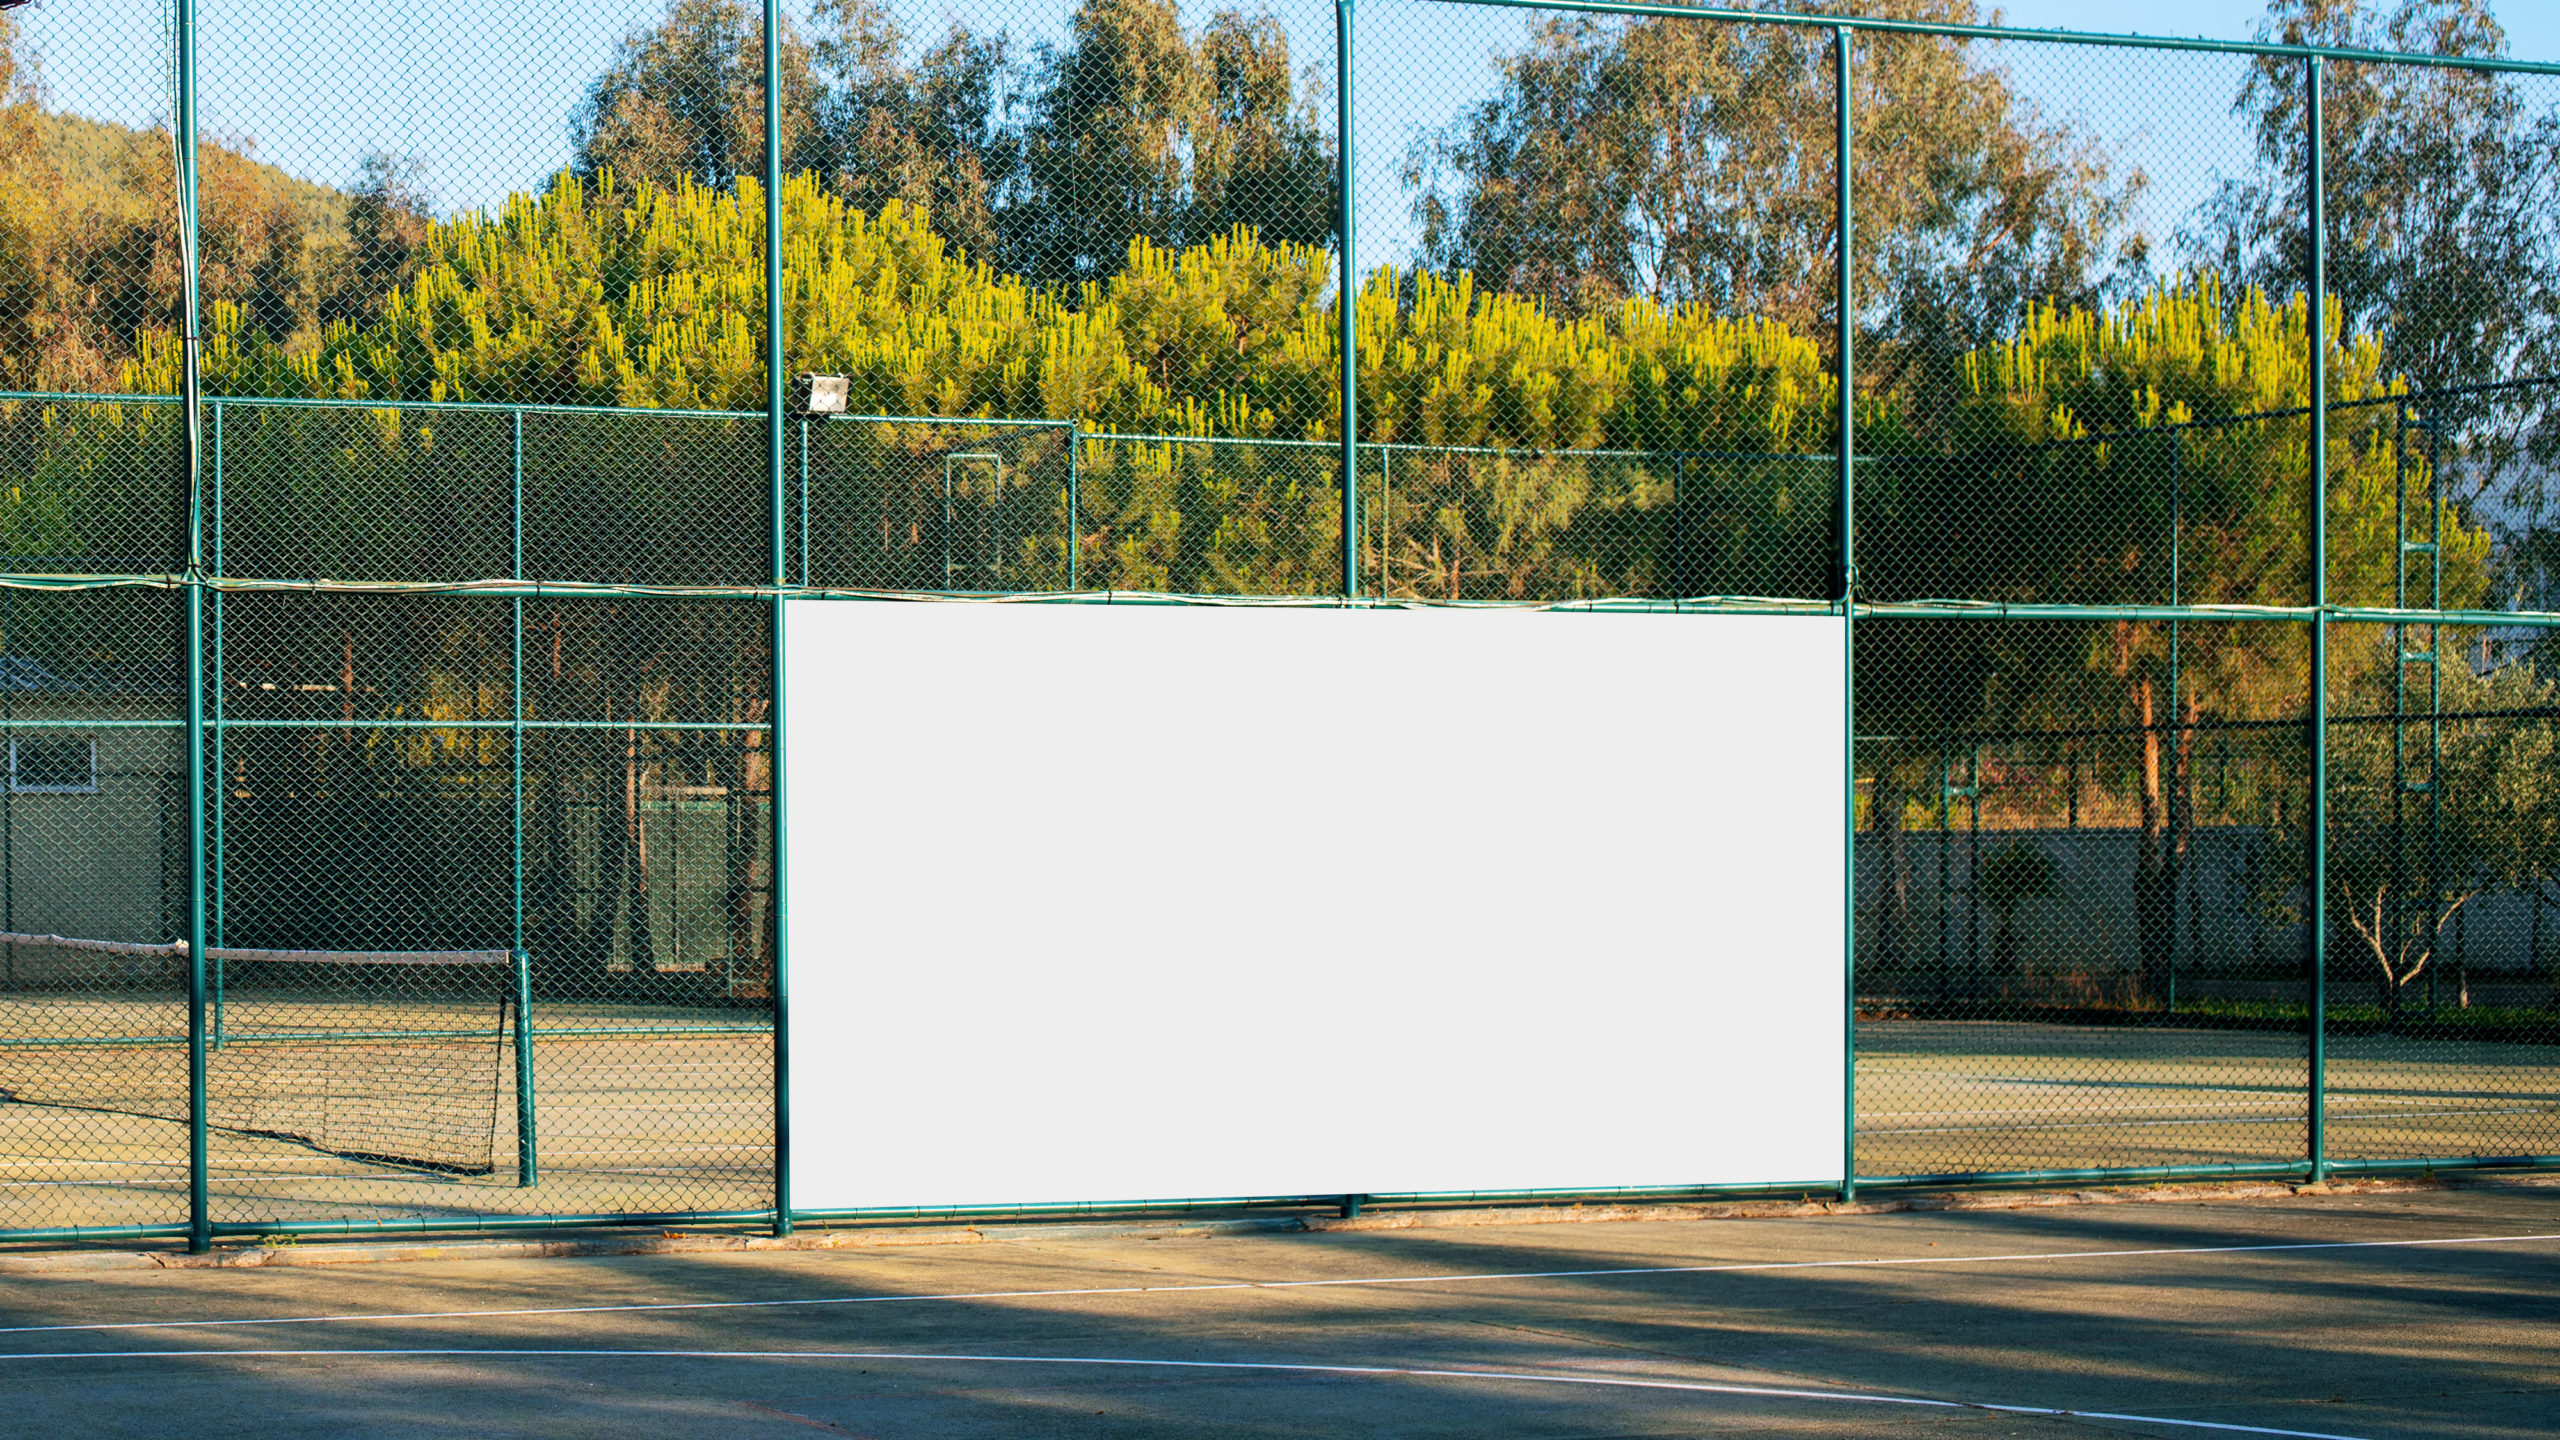 spanduk iklan putih kosong dengan mockup di pagar besi di lapangan olahraga